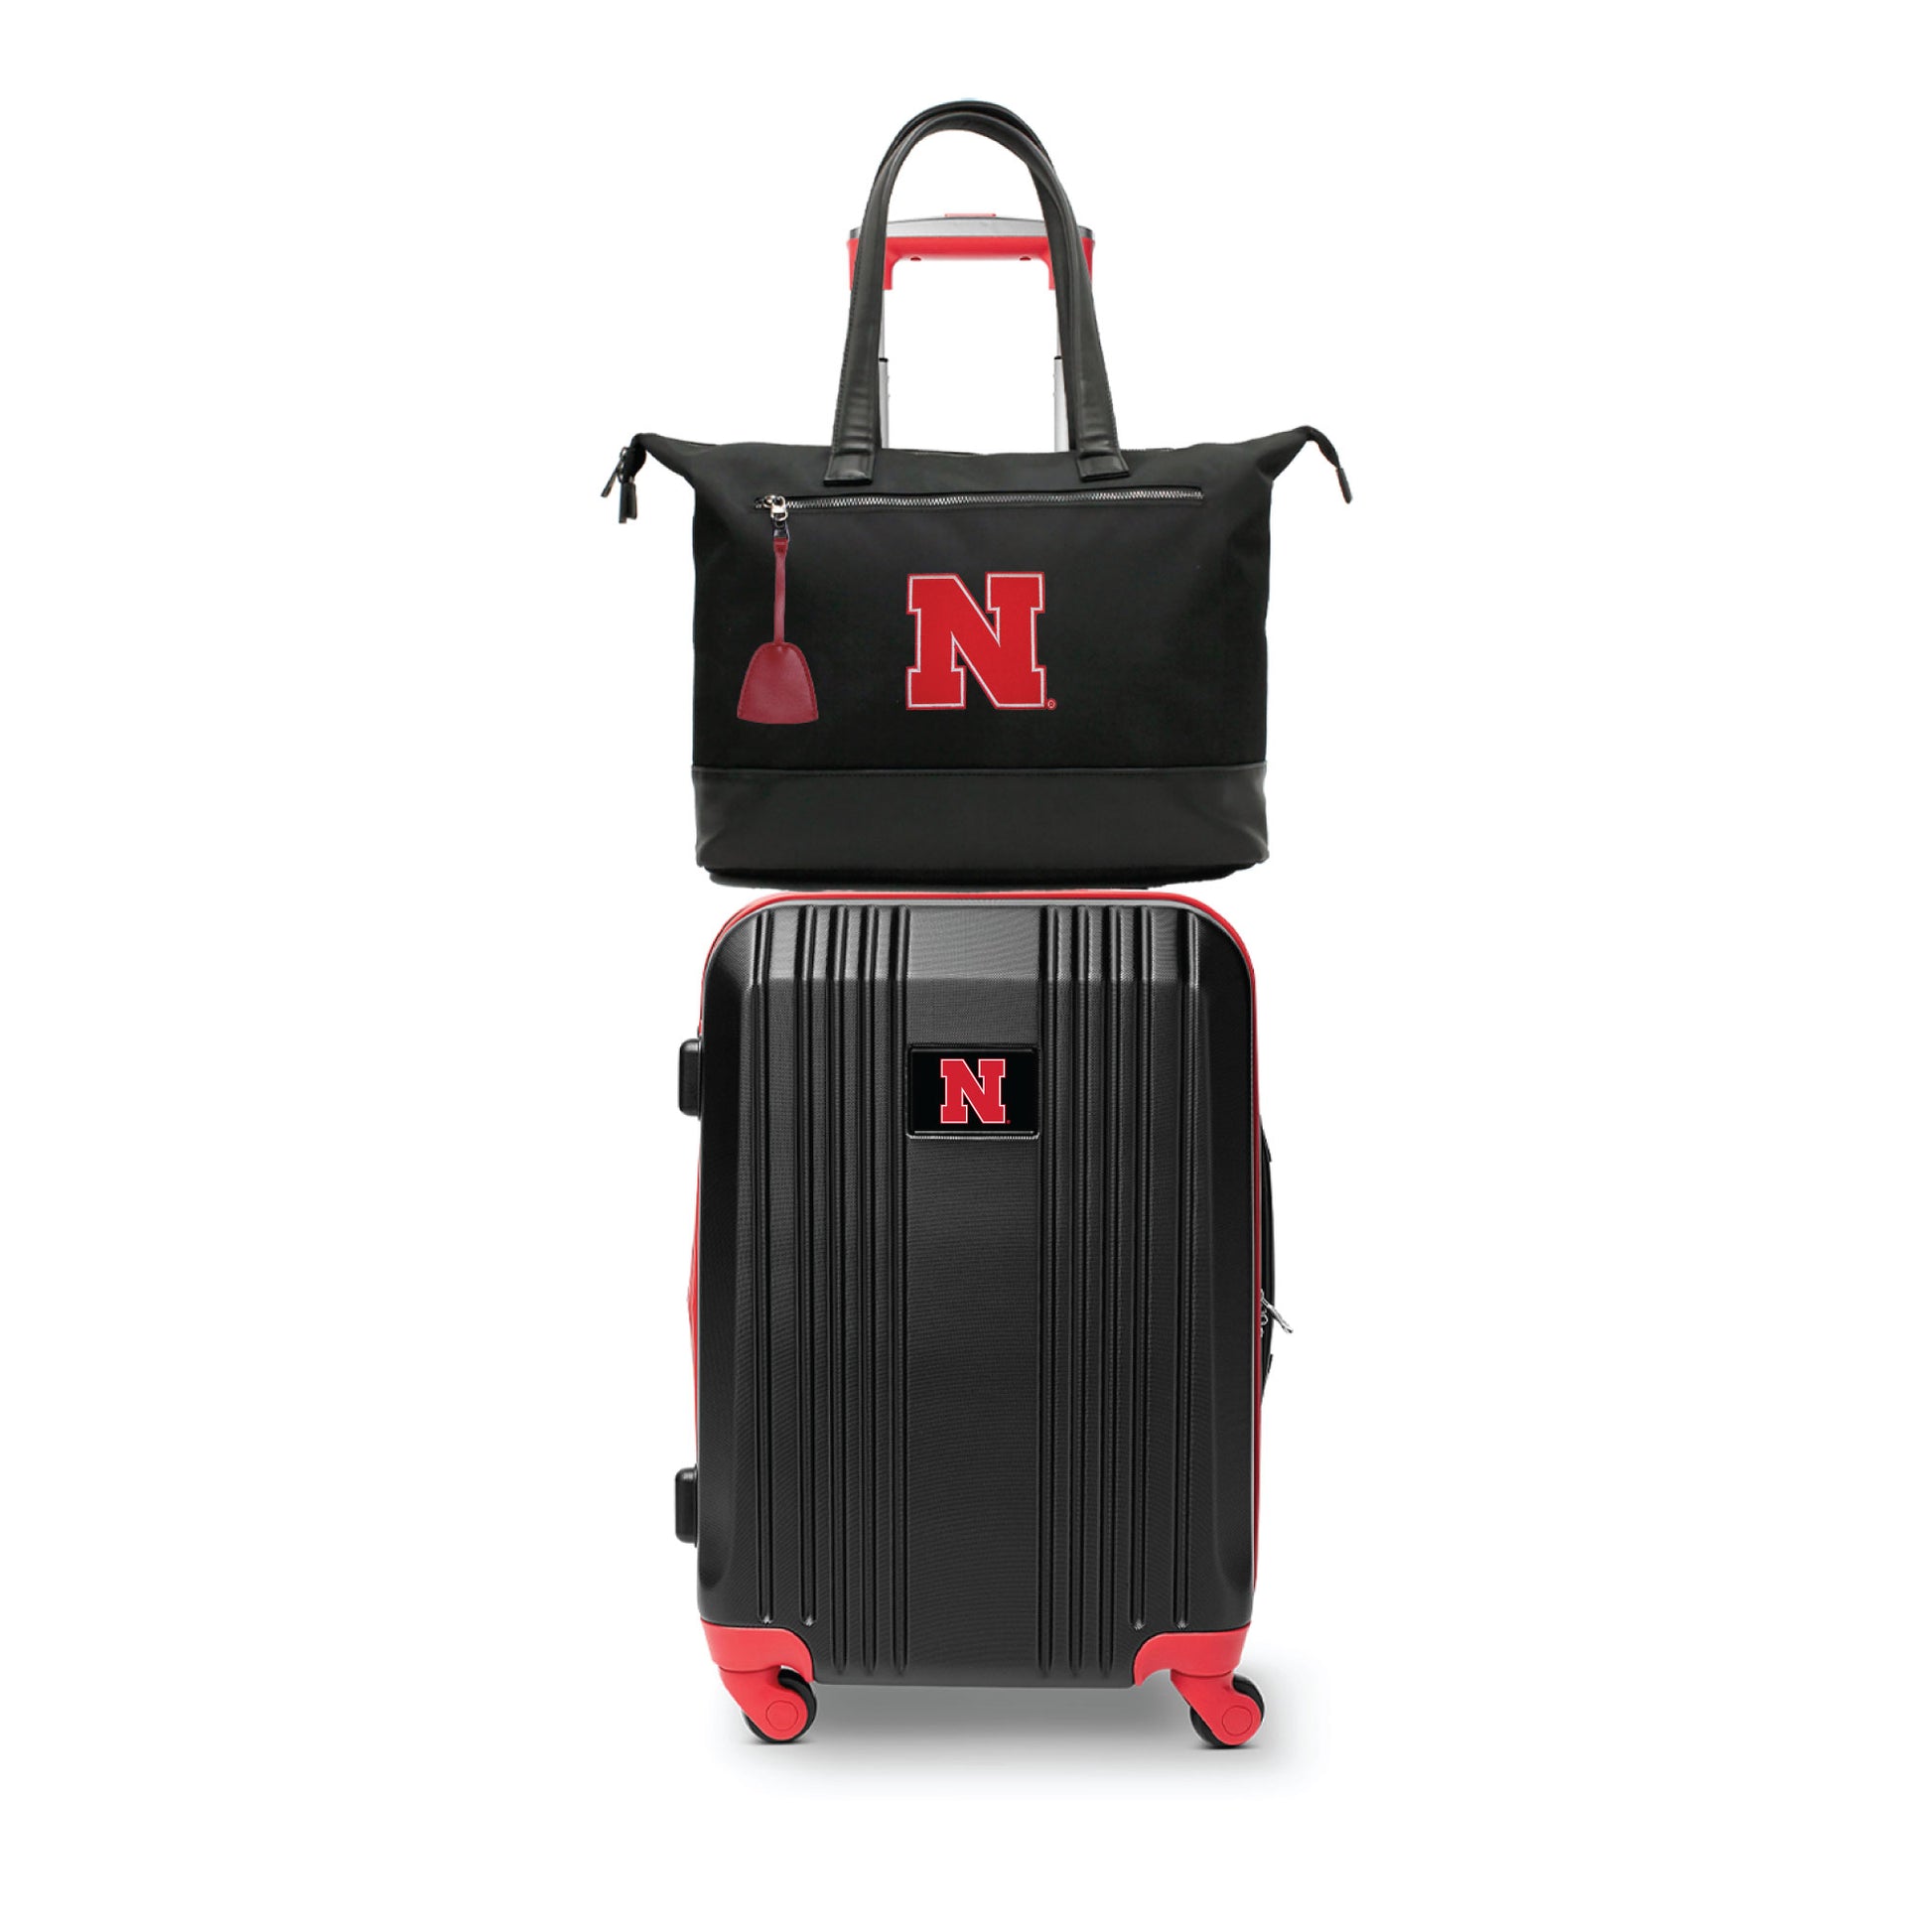 Nebraska Cornhuskers Premium Laptop Tote Bag and Luggage Set